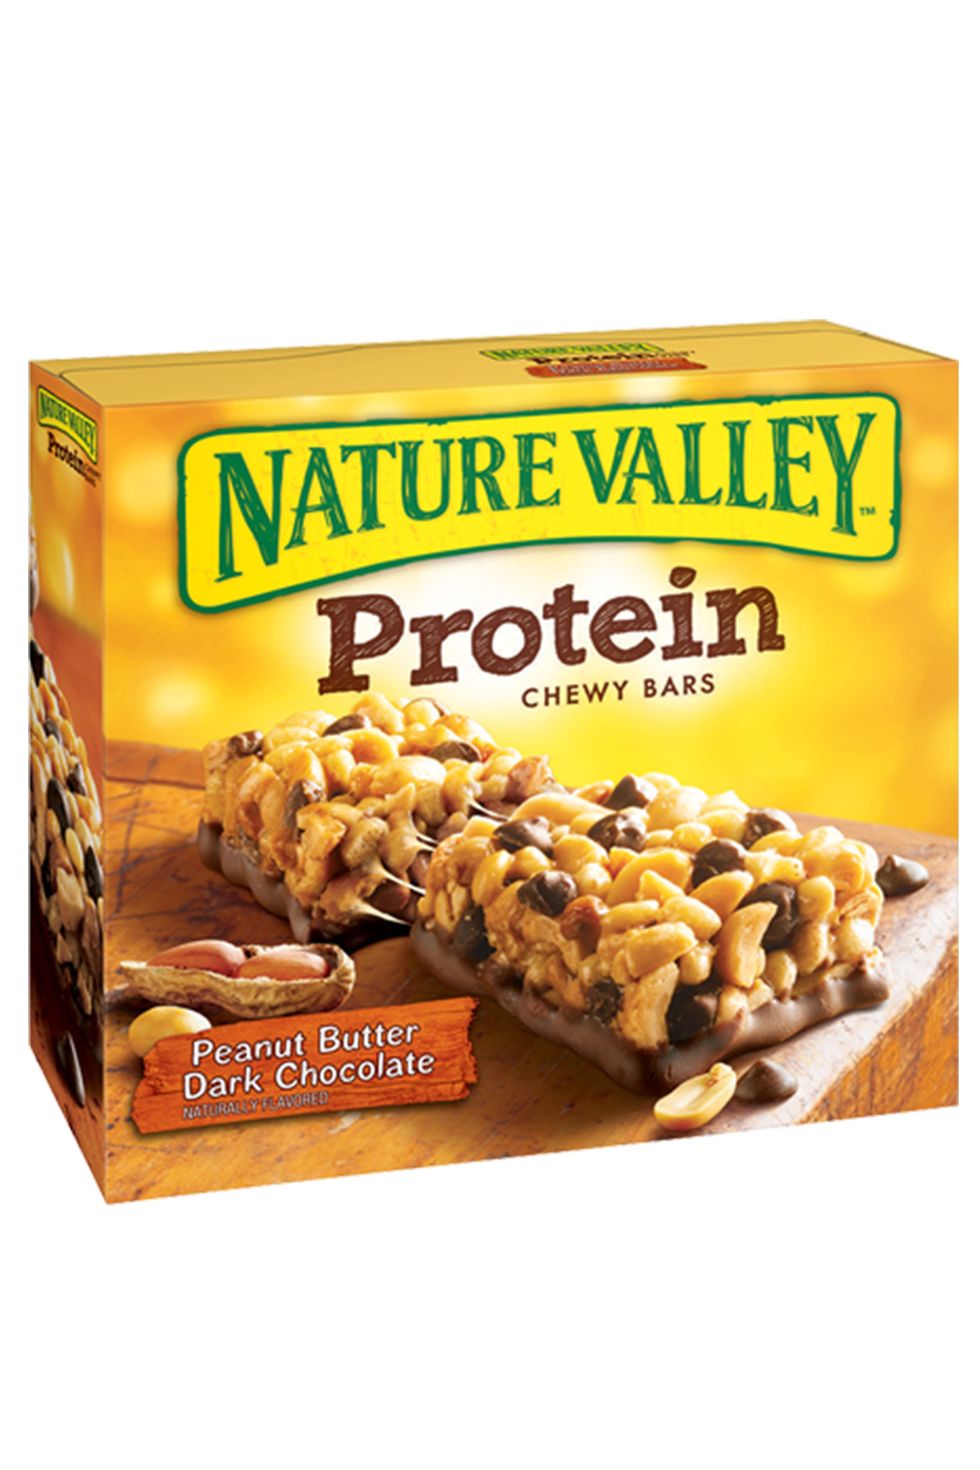 Nature Valley Peanut Butter Dark Chocolate Protein Bars